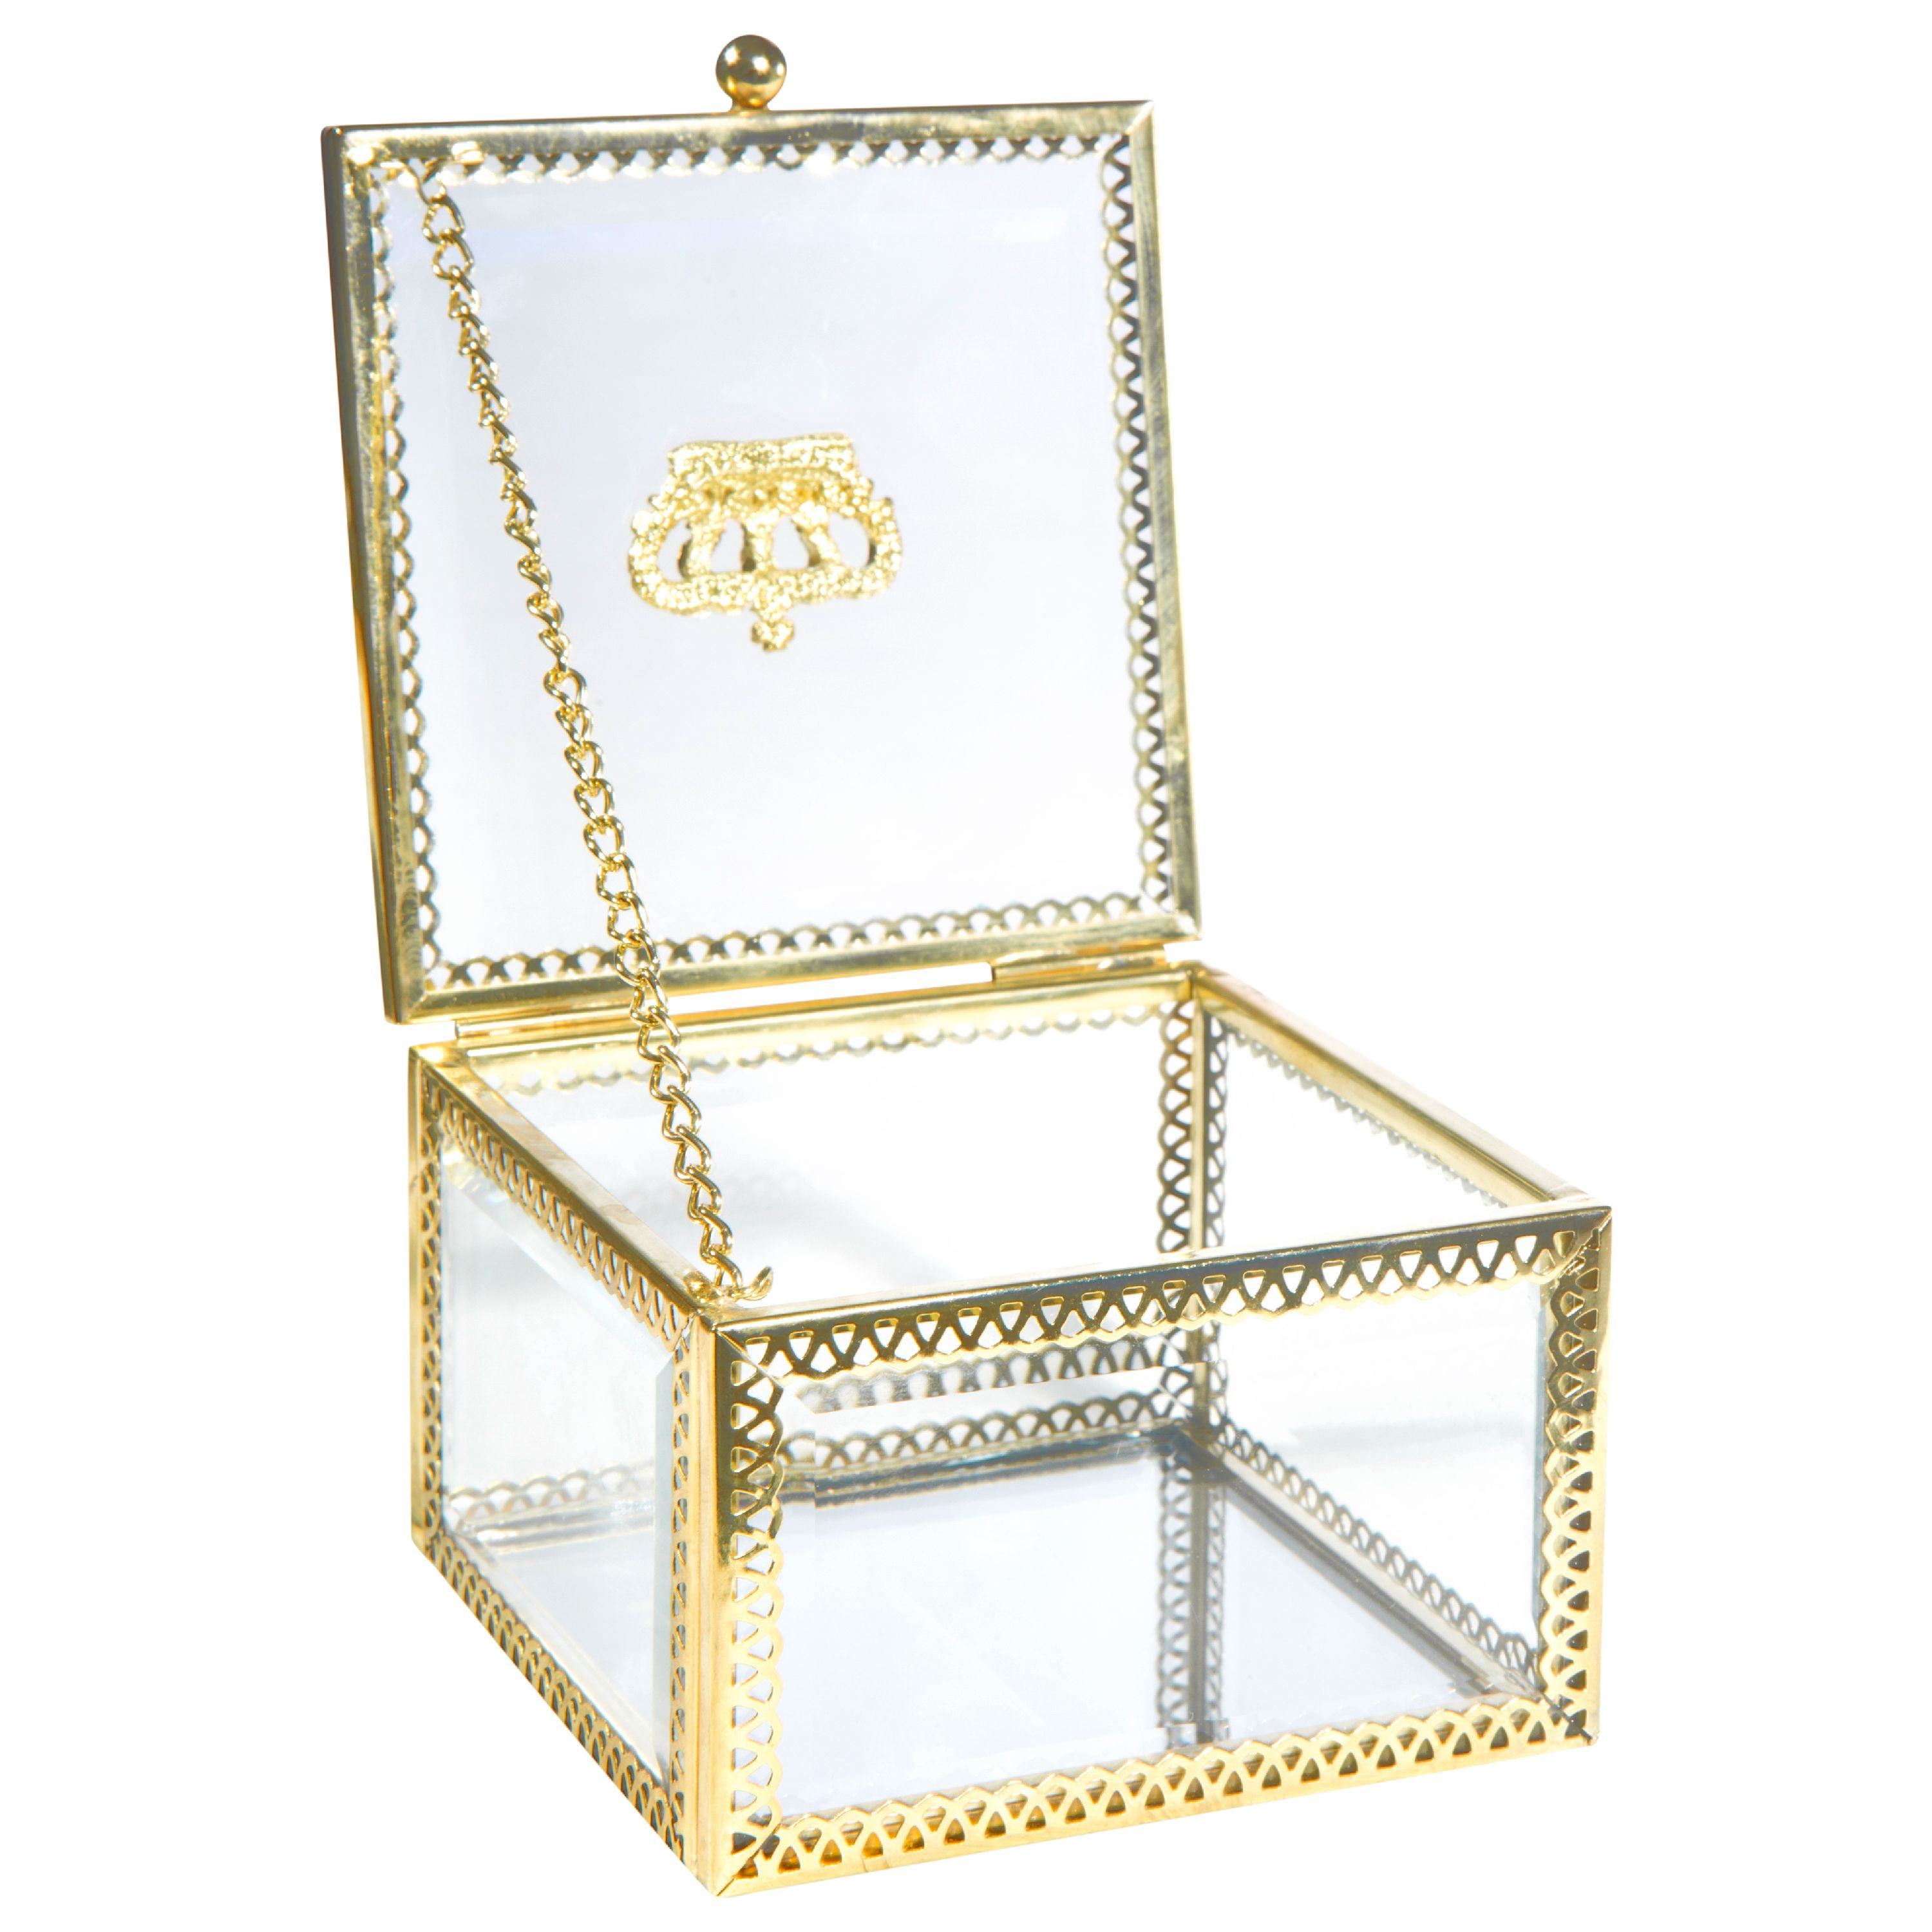 Vintage Ornate Milk Glass Trinket Box with Decorative Gold Embellishments